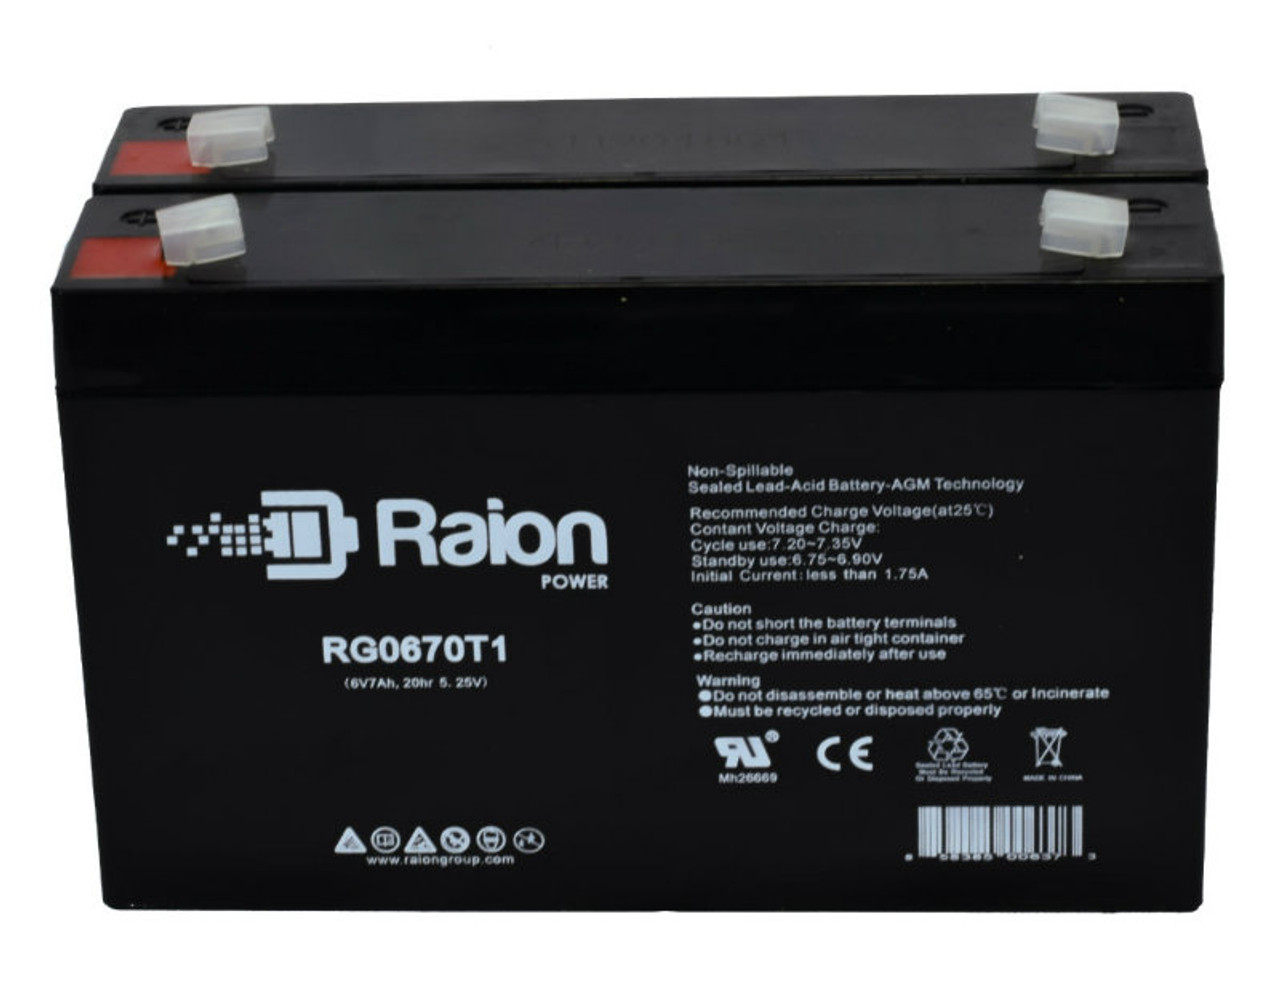 Raion Power RG0670T1 6V 7Ah Replacement Emergency Light Battery for Light Alarms FL - 2 Pack